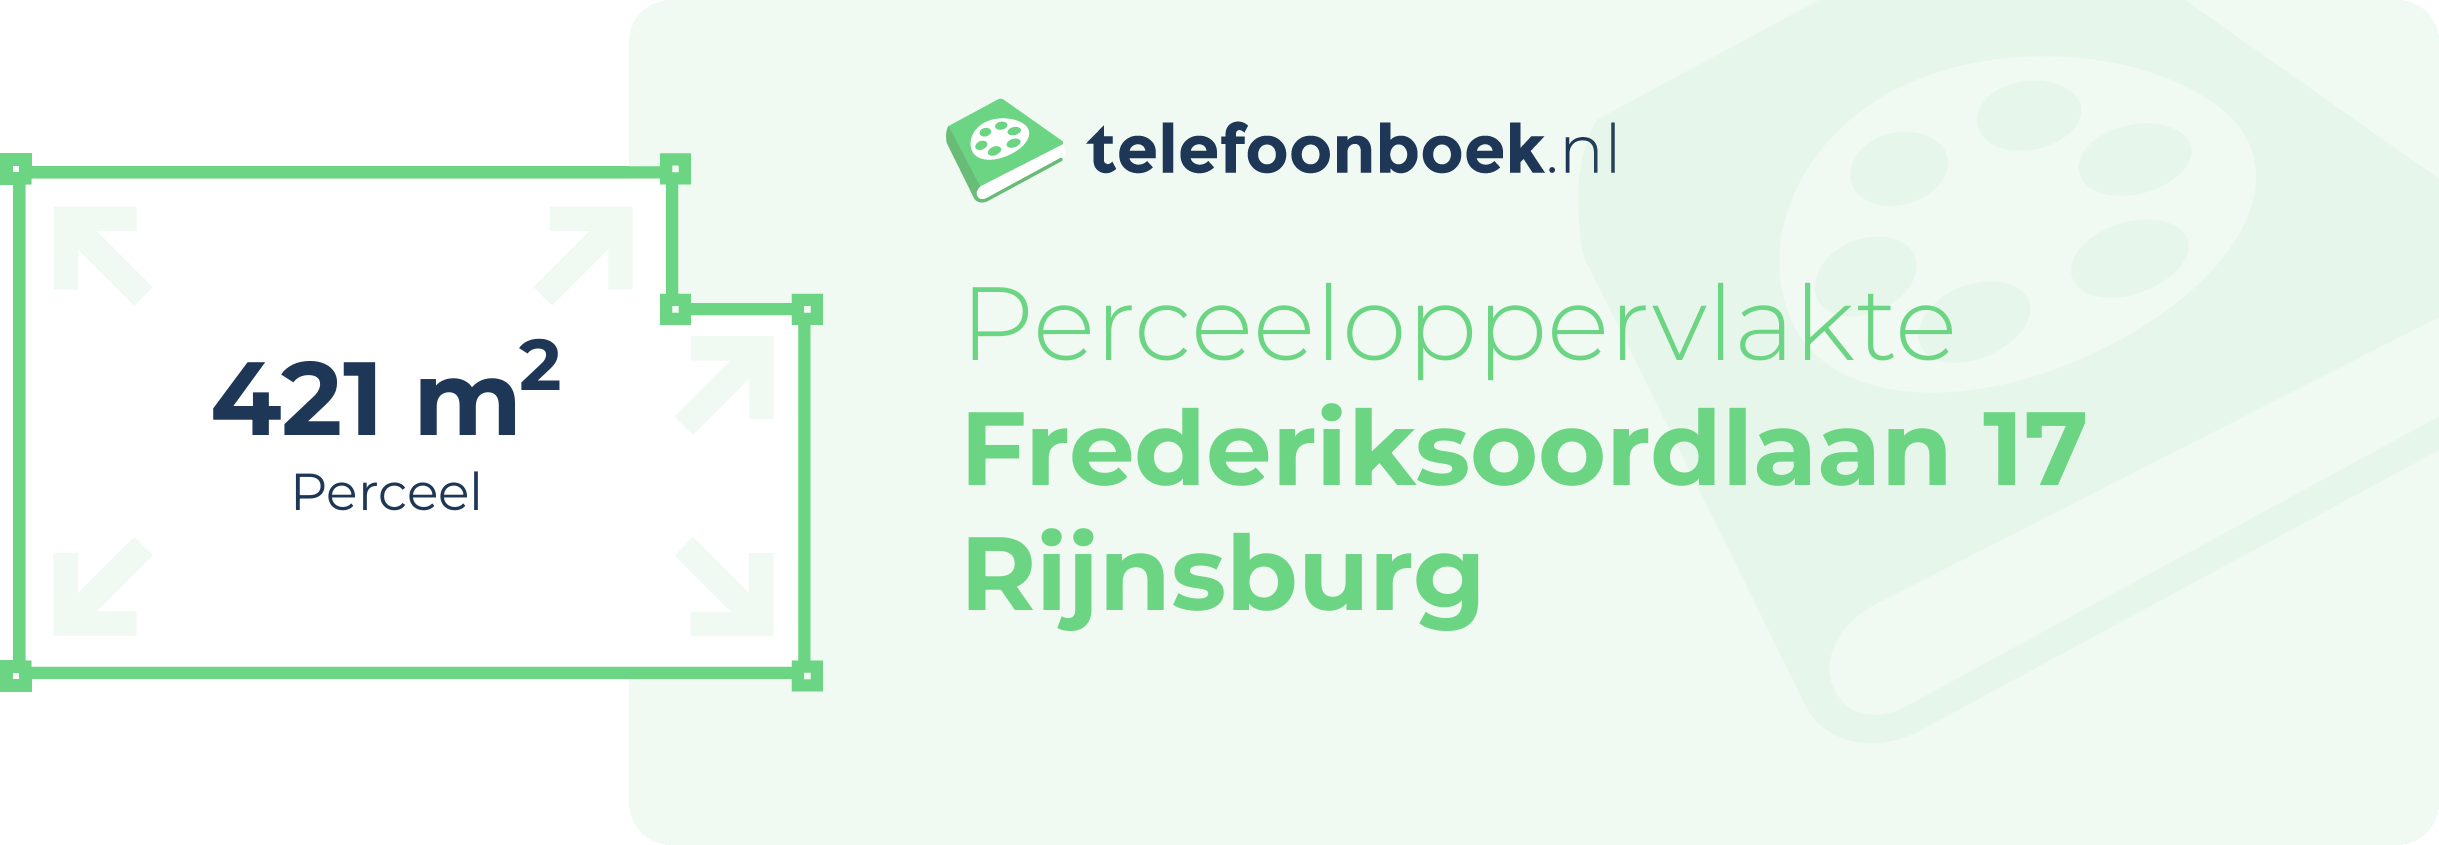 Perceeloppervlakte Frederiksoordlaan 17 Rijnsburg